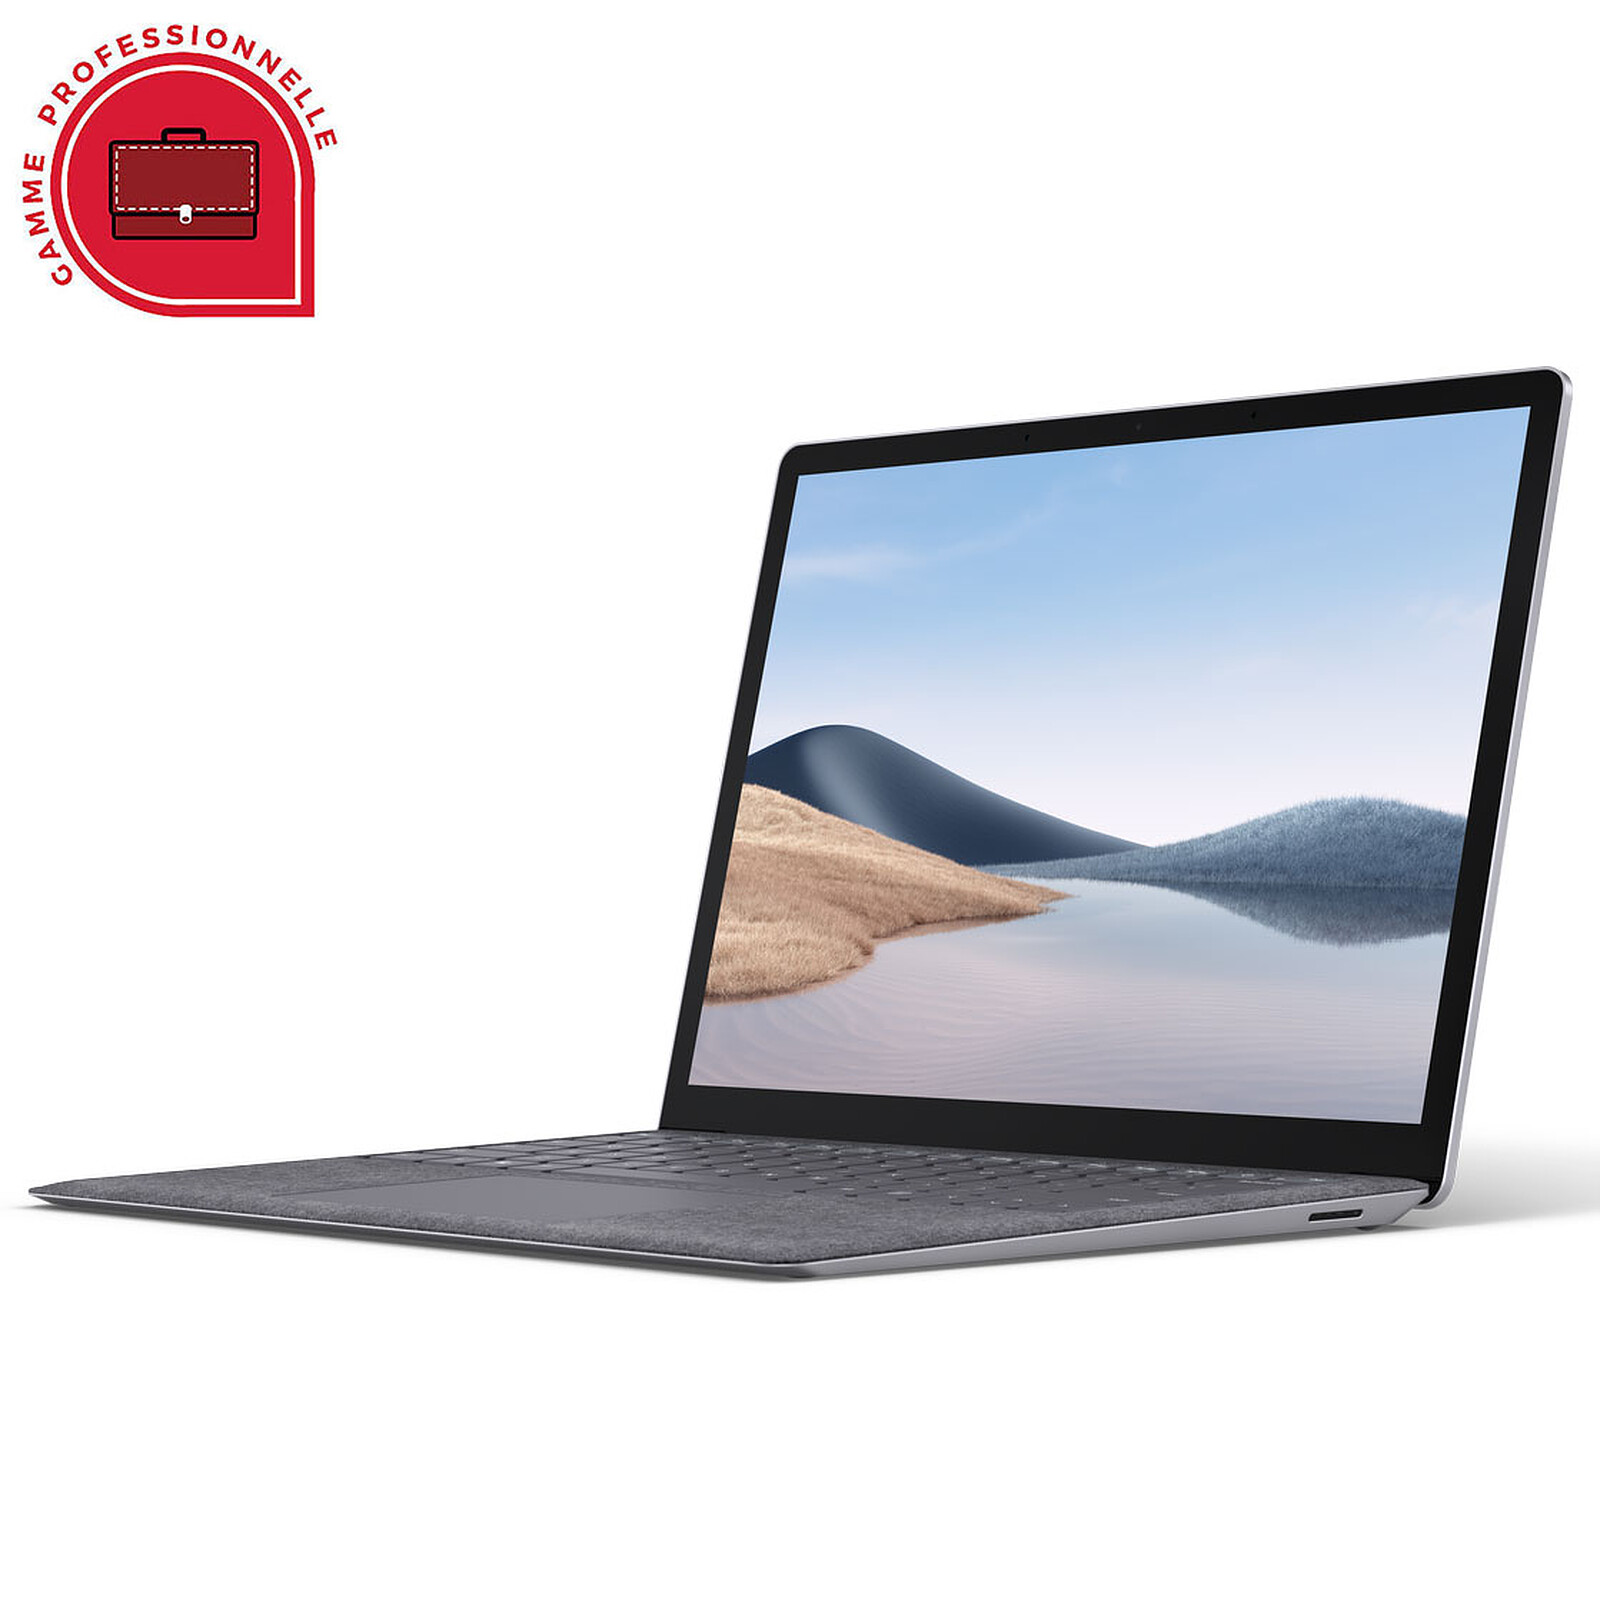 Microsoft Surface Laptop 4 13.5 for Business - Platinum (5BV-00040) -  Laptop - LDLC 3-year warranty